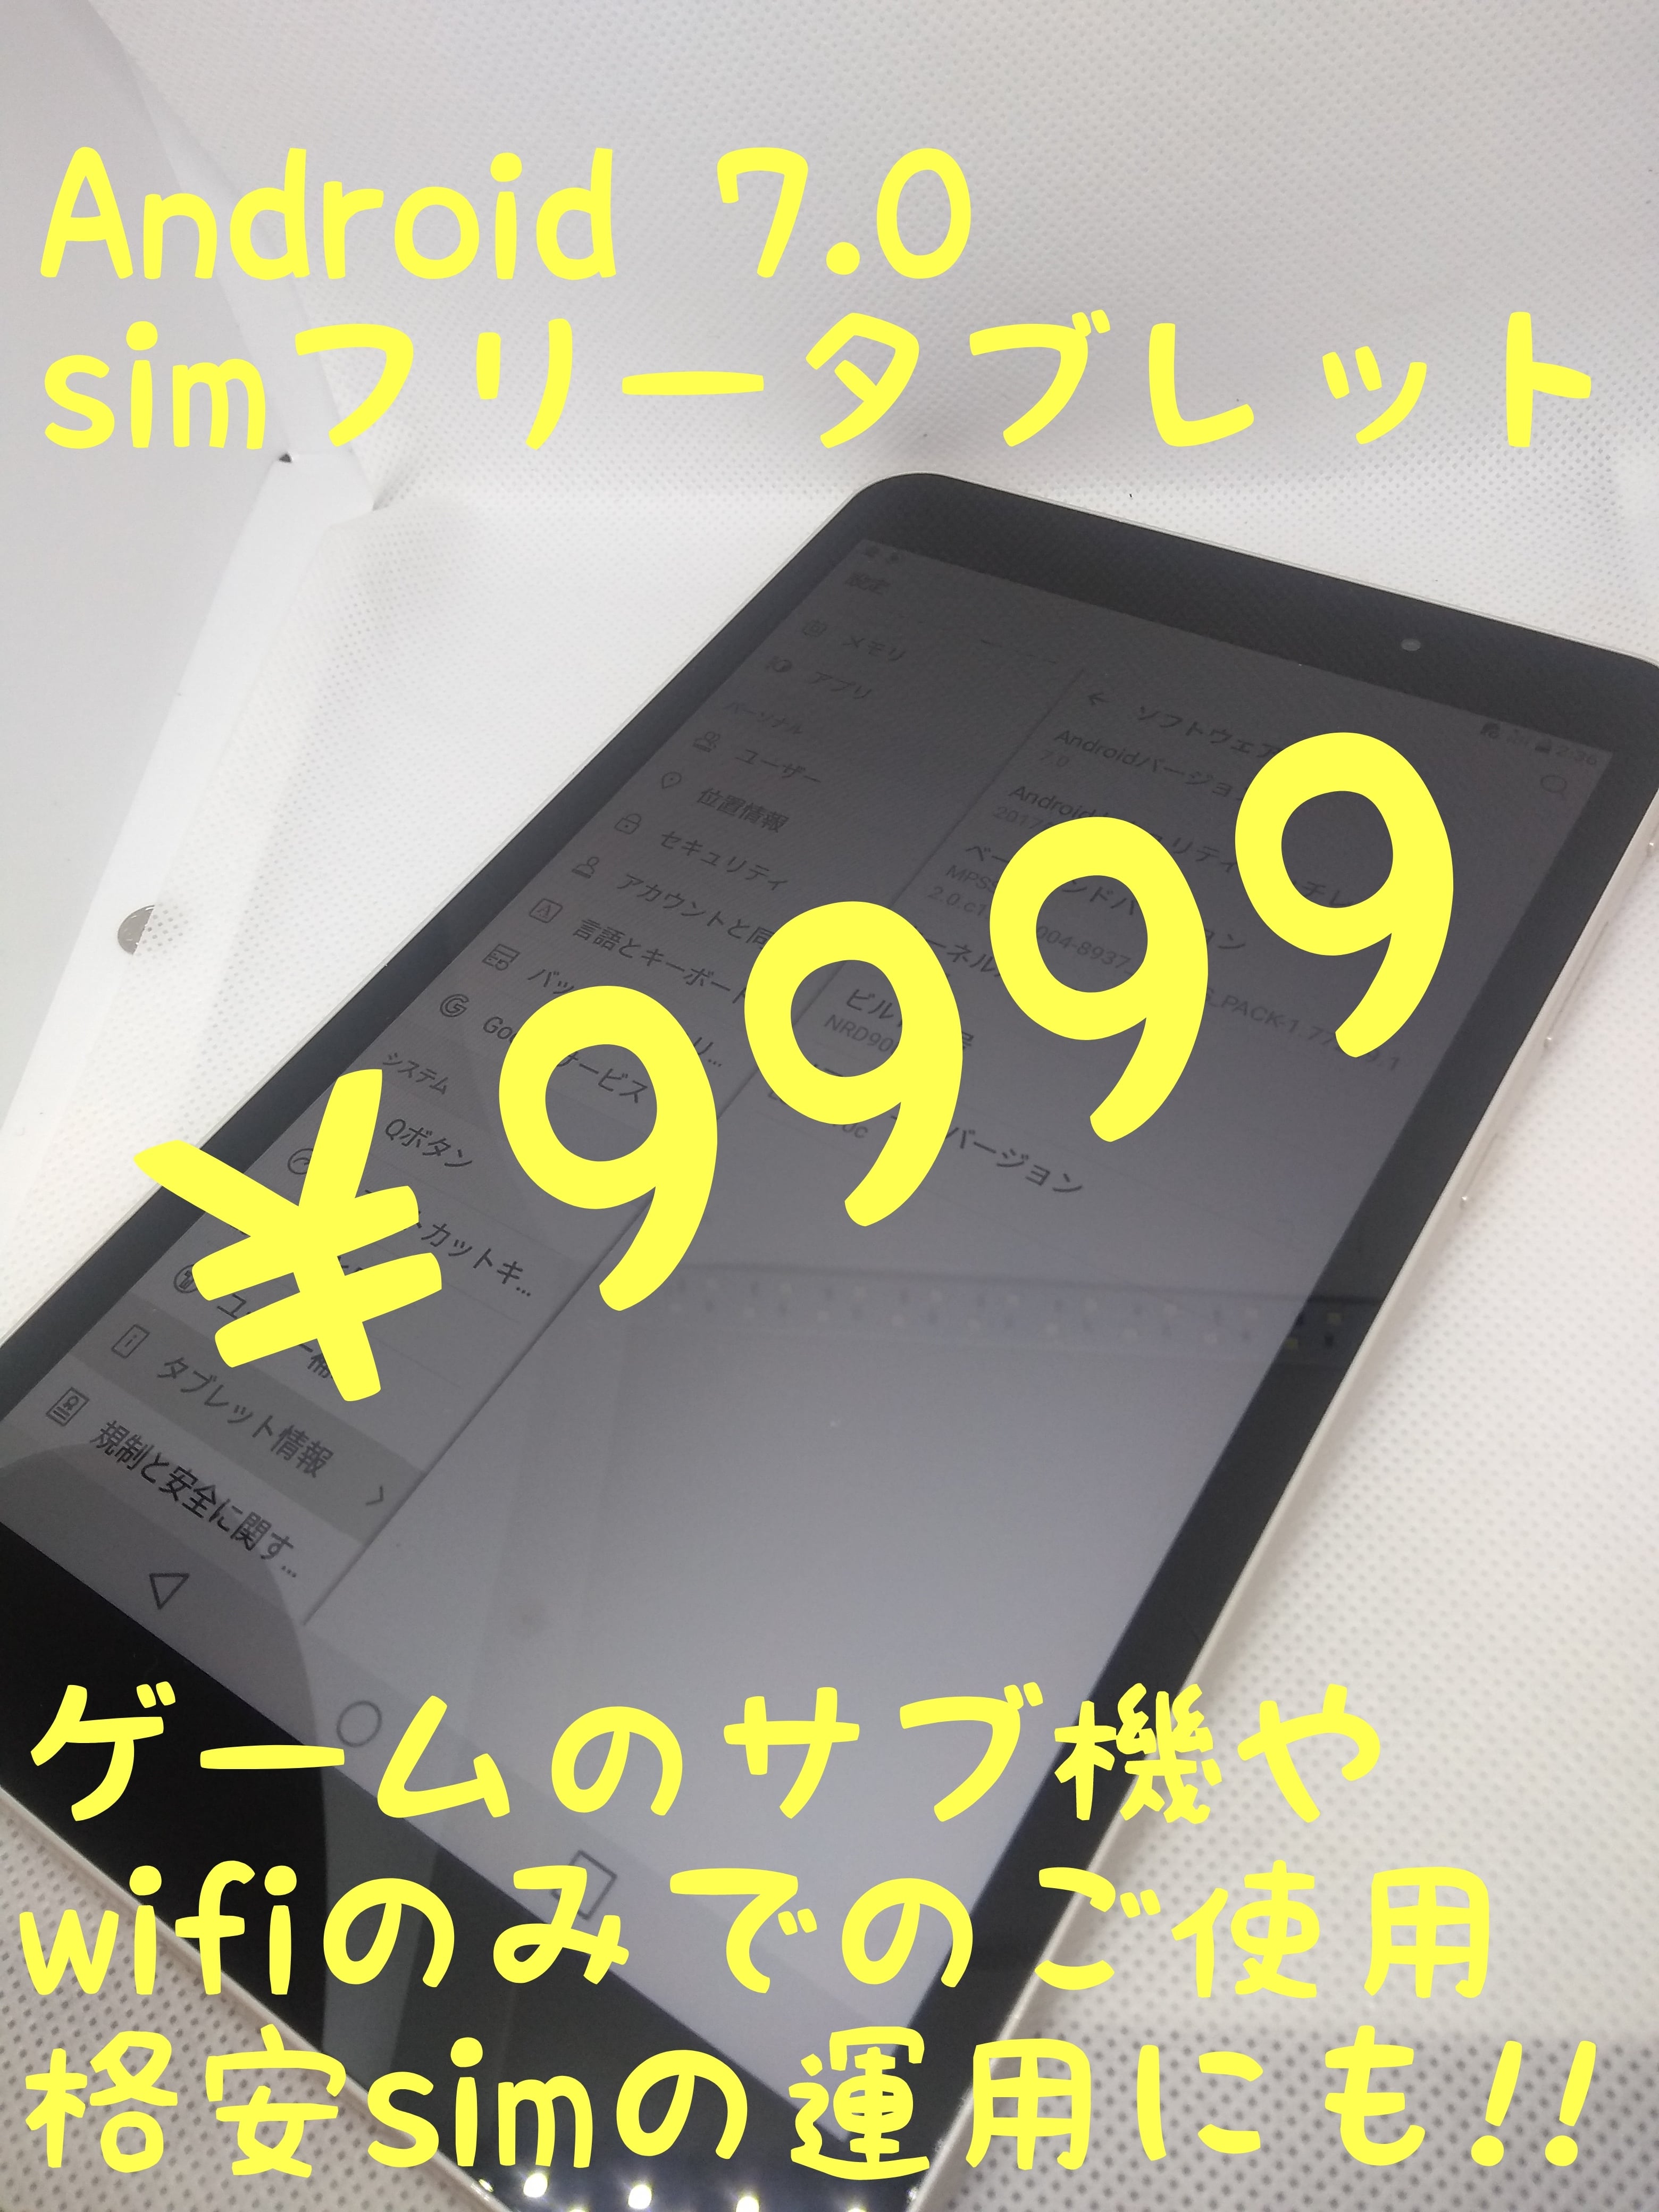 LGタブレット LGT02 Gpad 8.0 III 【JCOM版 】